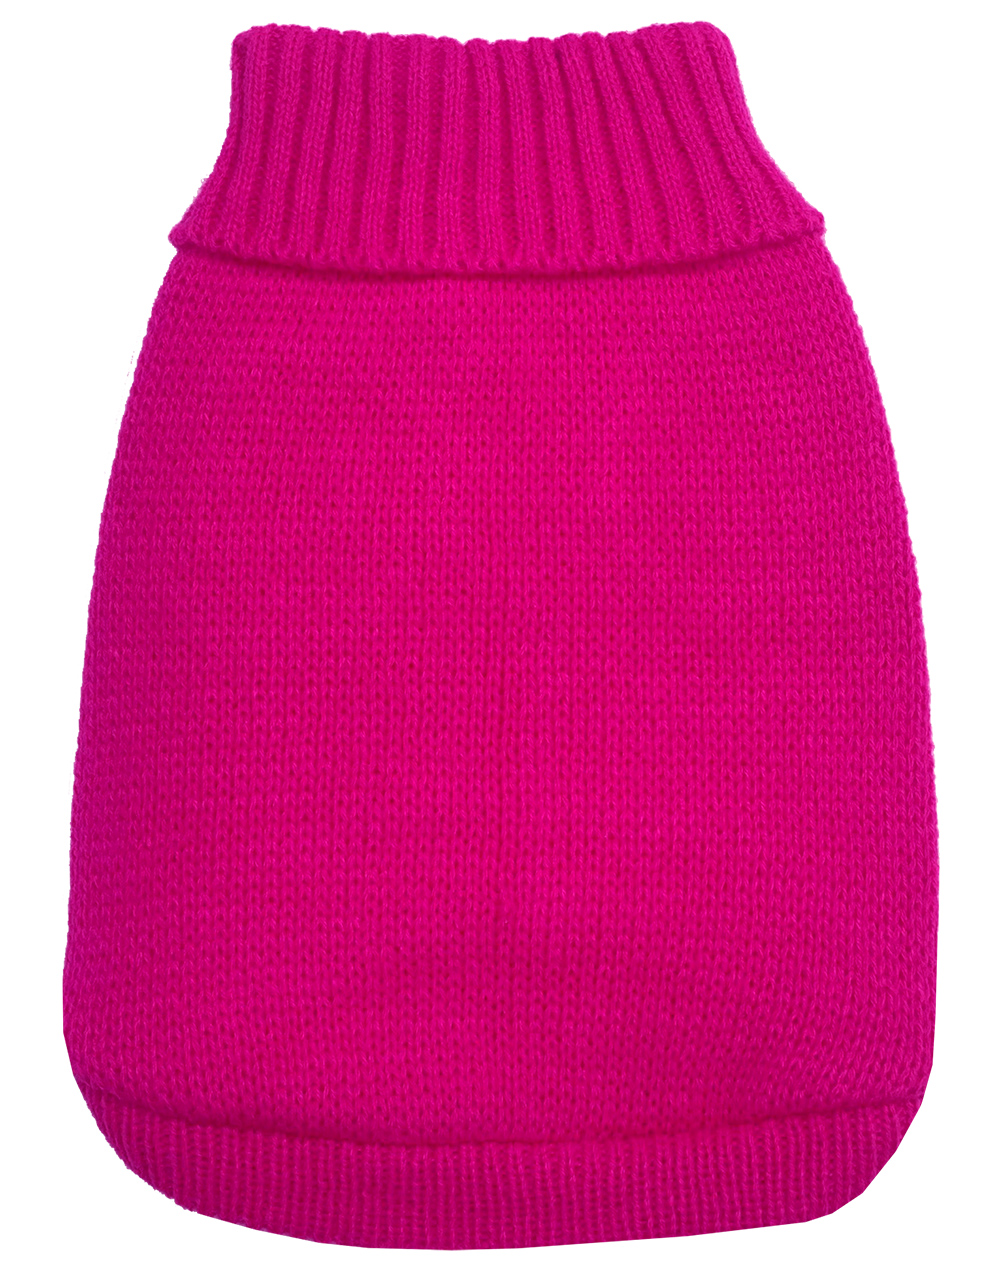 Knit Pet Sweater Bright Pink Size 4X